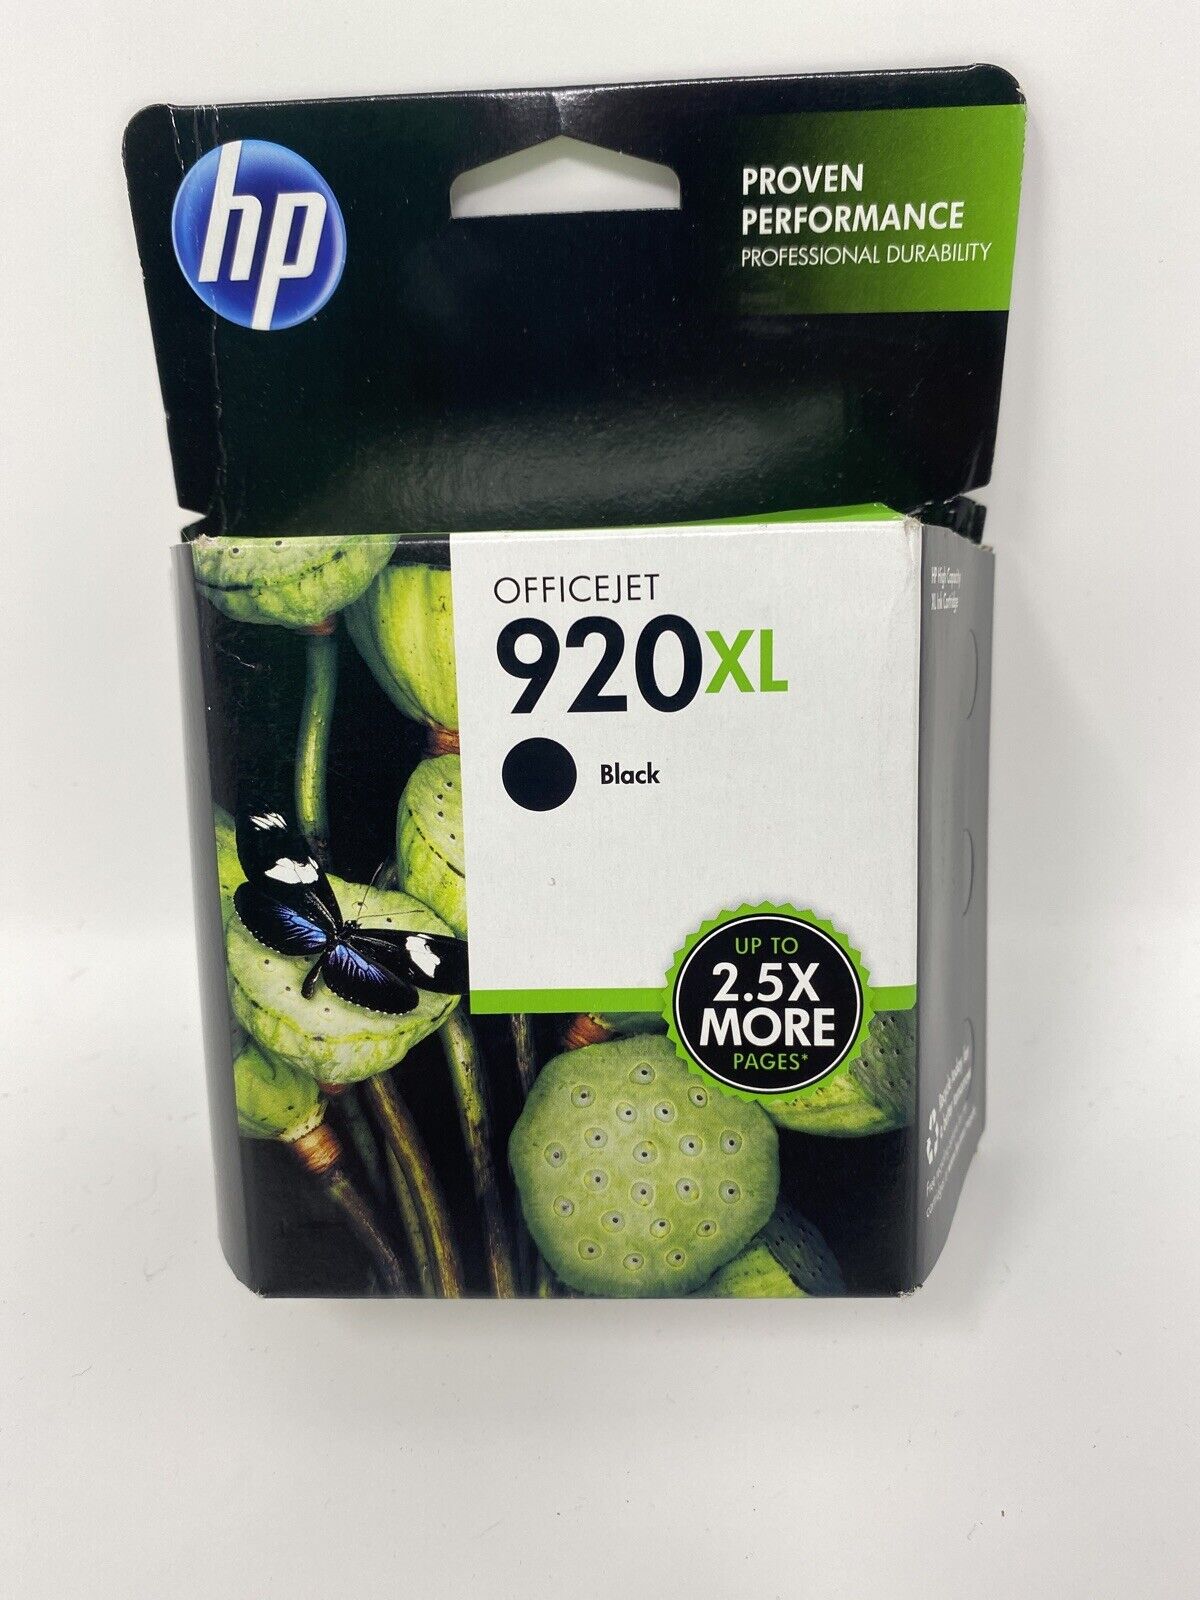 Genuine HP 920XL Black Ink Cartridge (CD975AN) June 2015 EXP Brand New Unopened